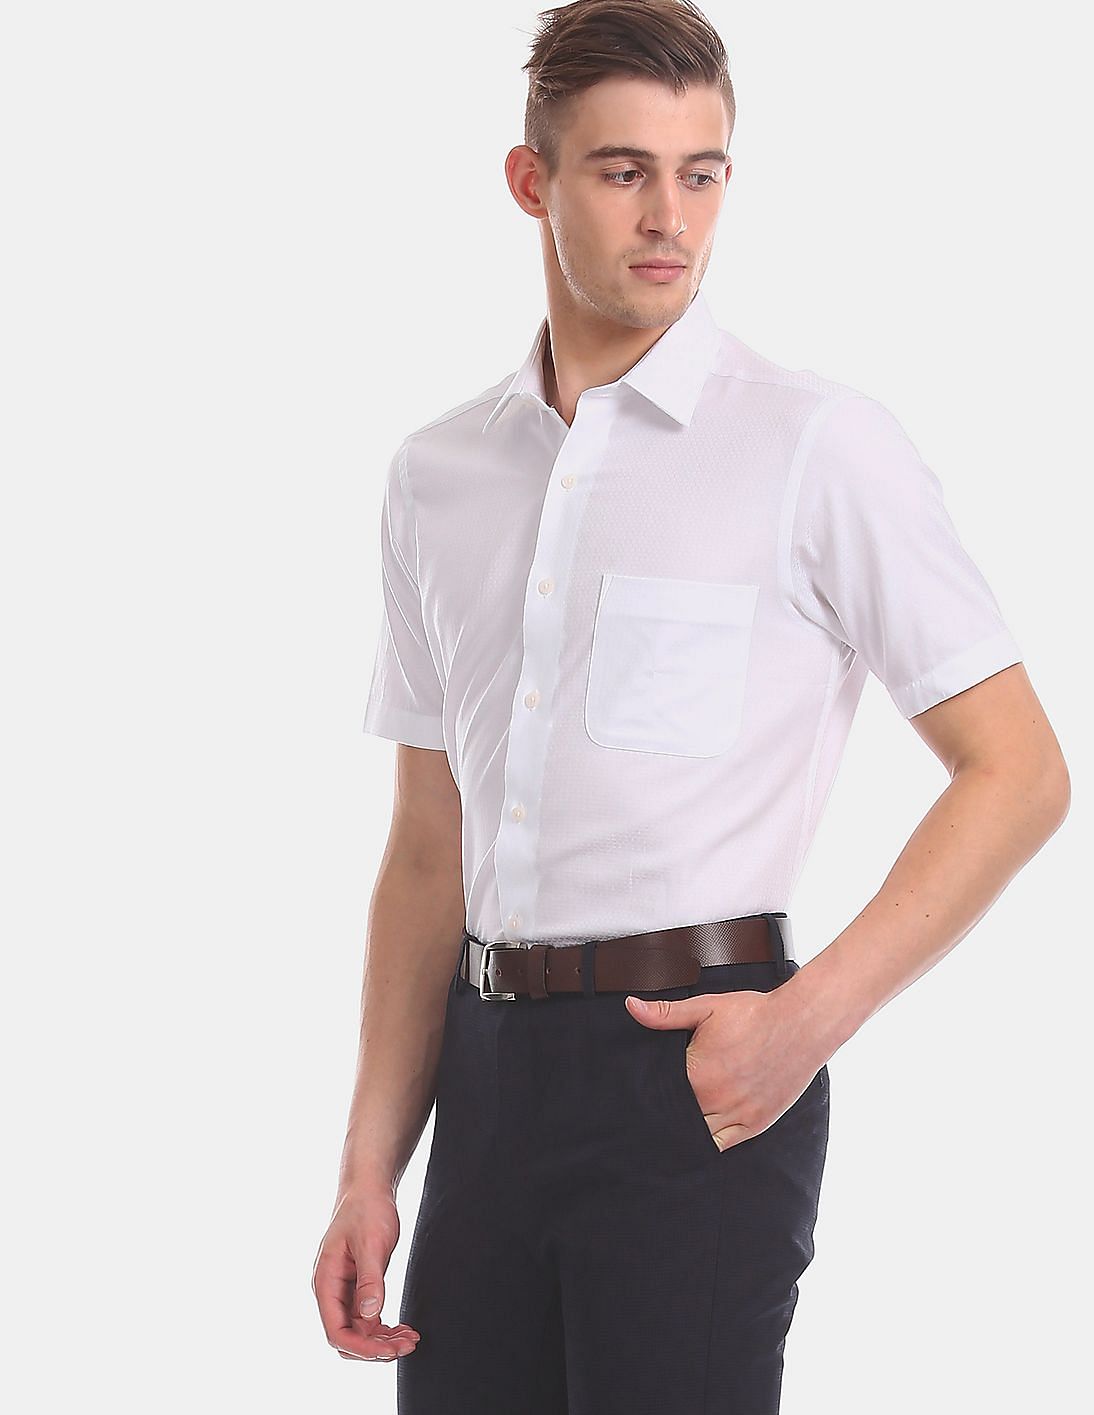 Buy Arrow Men Men White Short Sleeve Patterned Formal Shirt - NNNOW.com